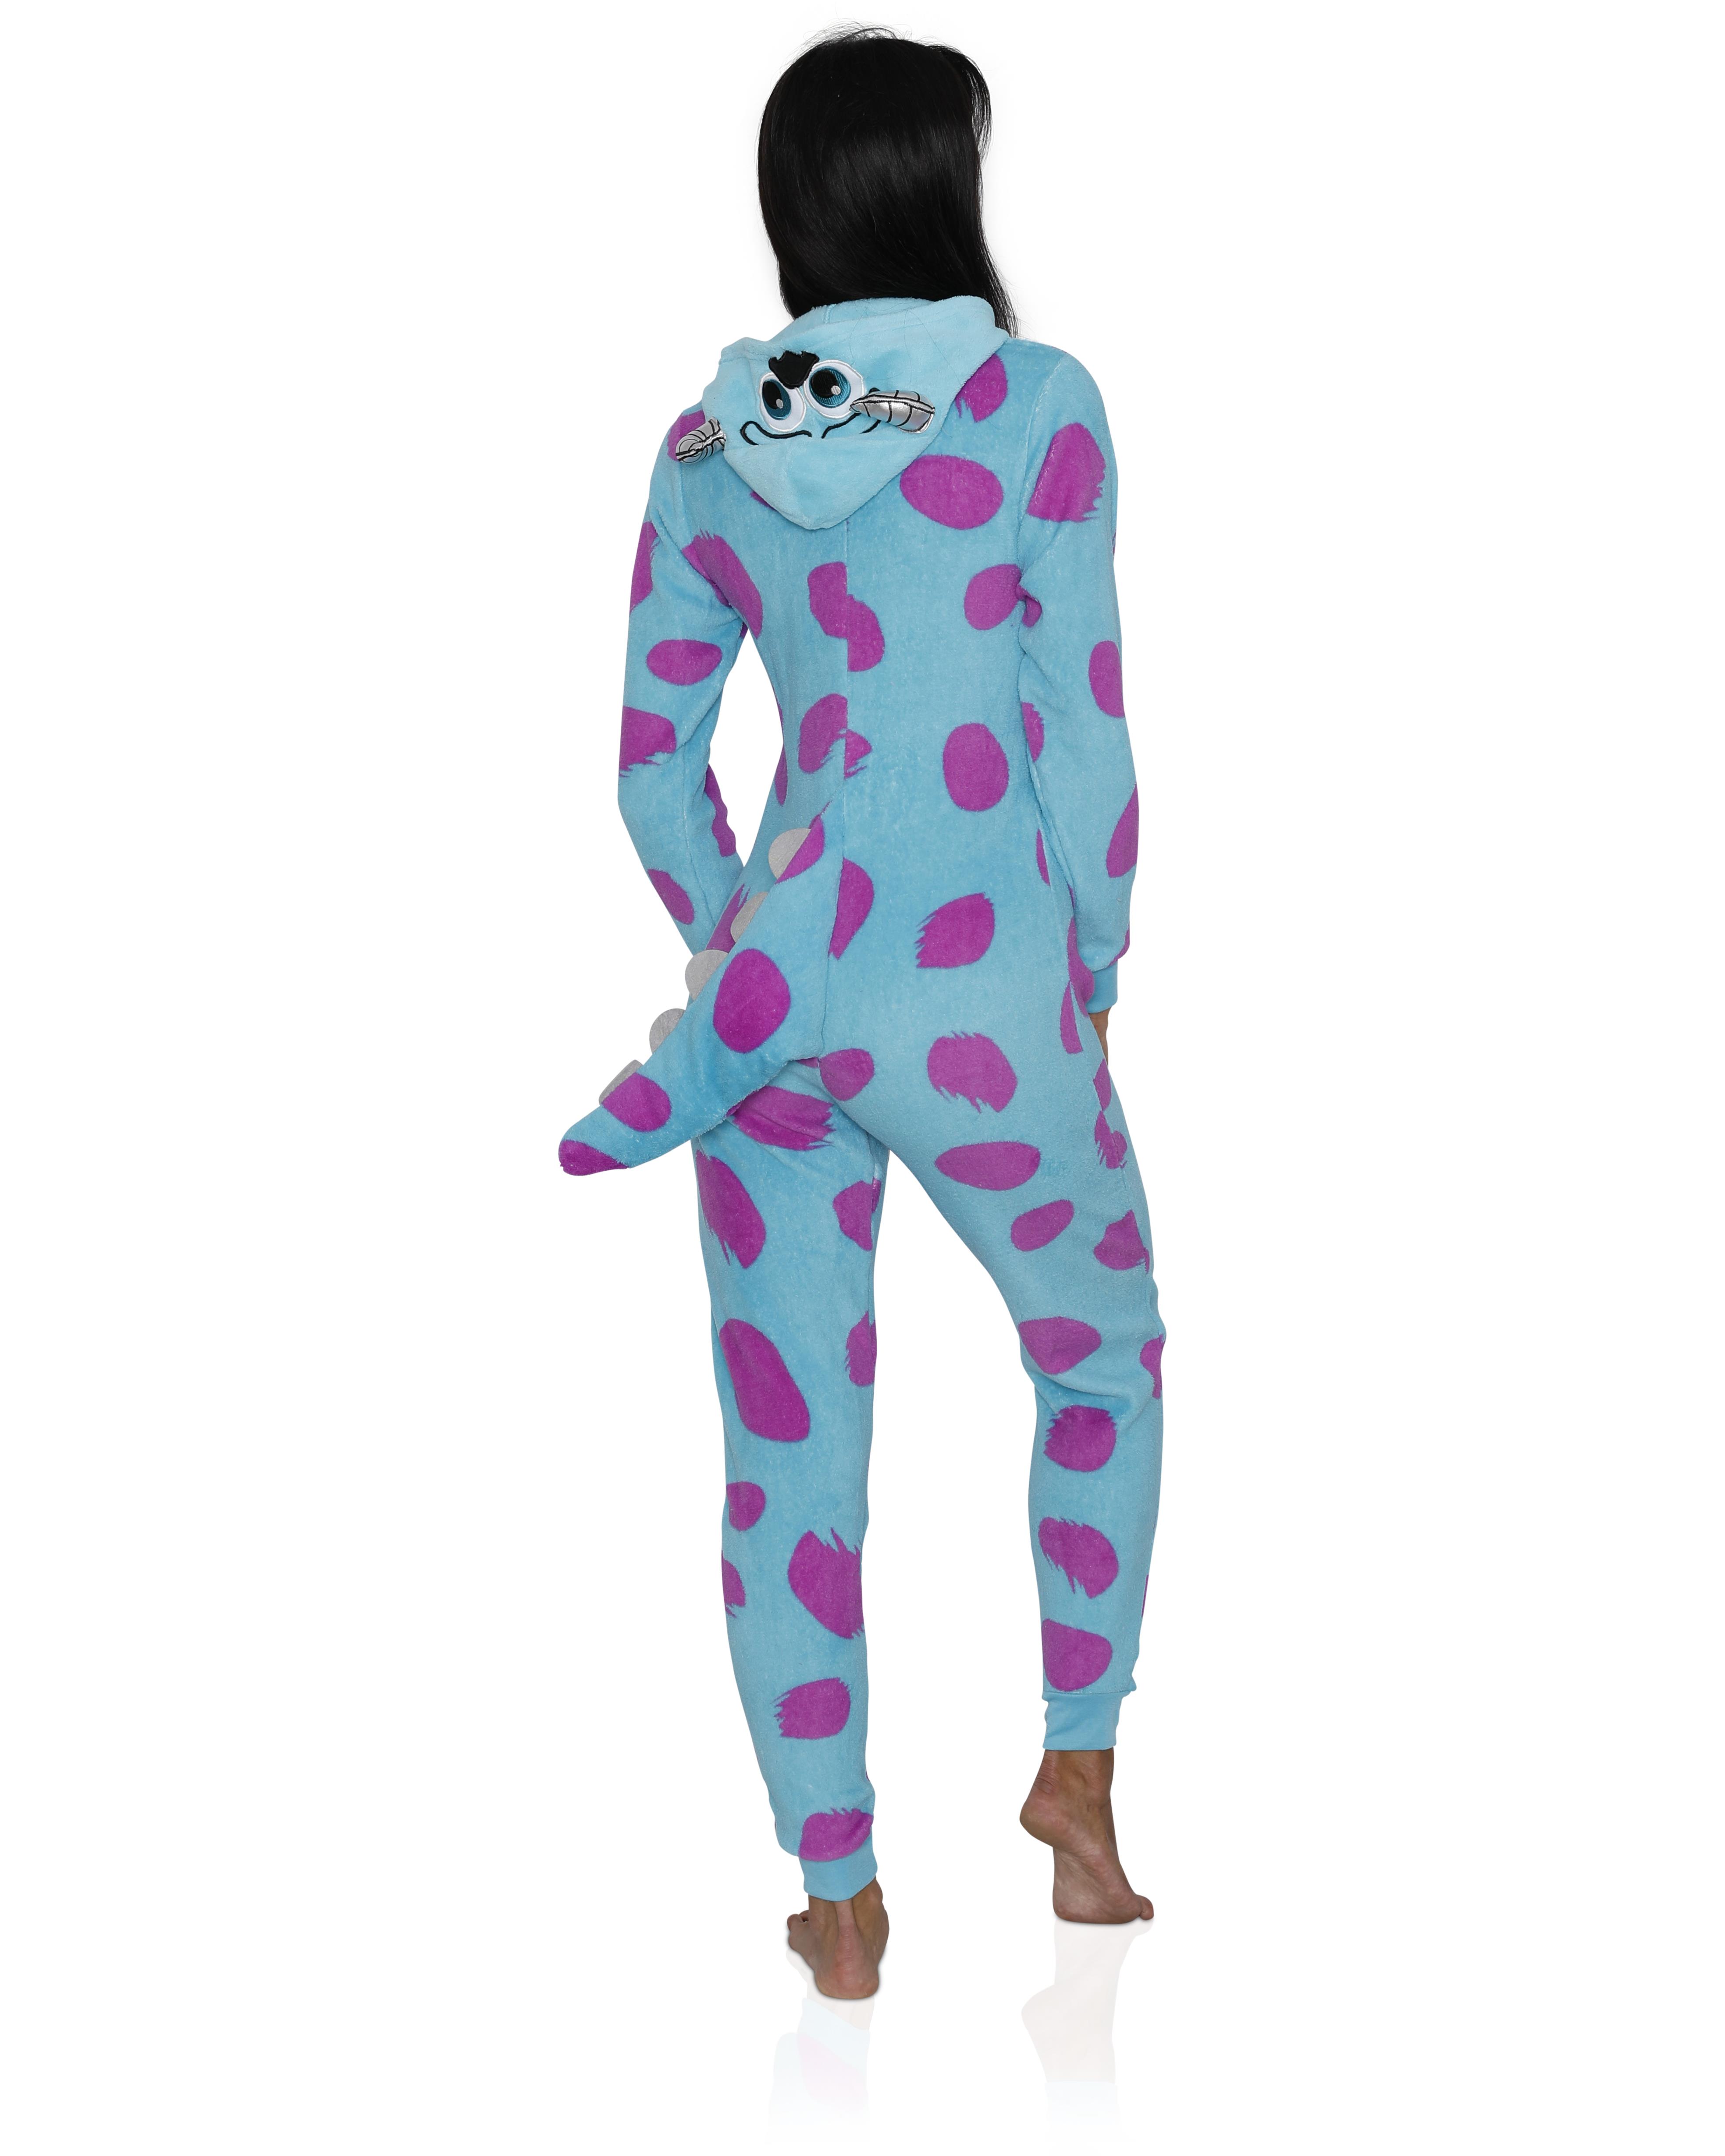 Women's Union Suit Disney Costume Onesie Plush Adult Pajama, Sulley_H, Size: Large - image 2 of 3